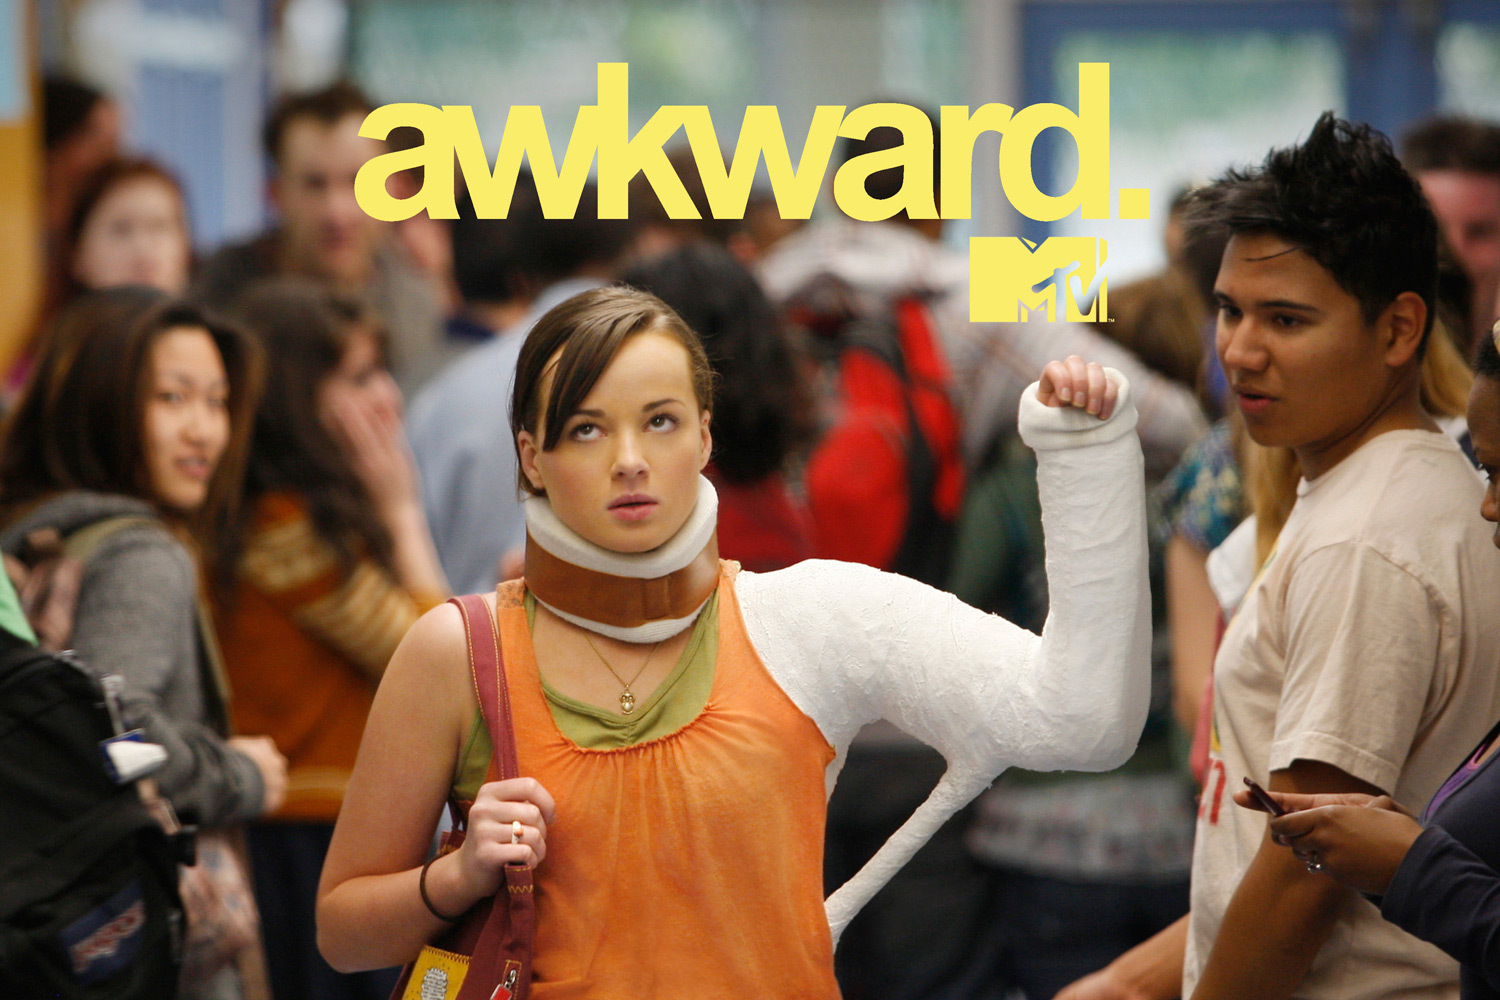 Awkward Pics, TV Show Collection